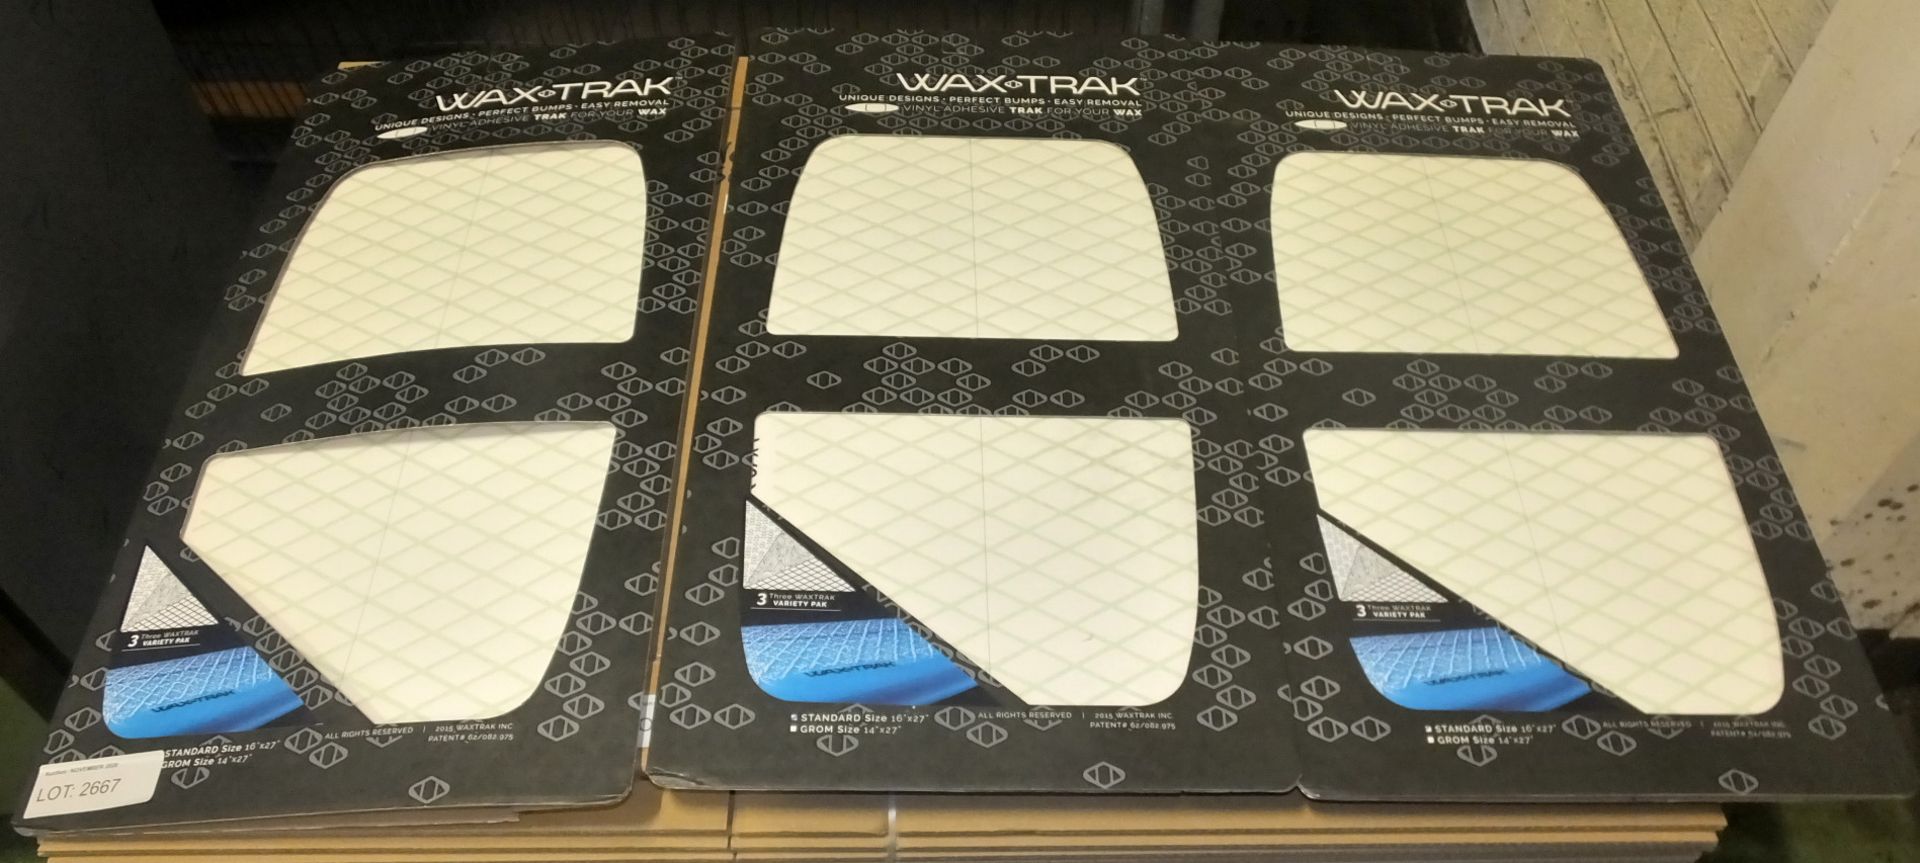 3x Packs of Wax Trak Vinyl Adhesive Sheets - 3 Sheets per pack